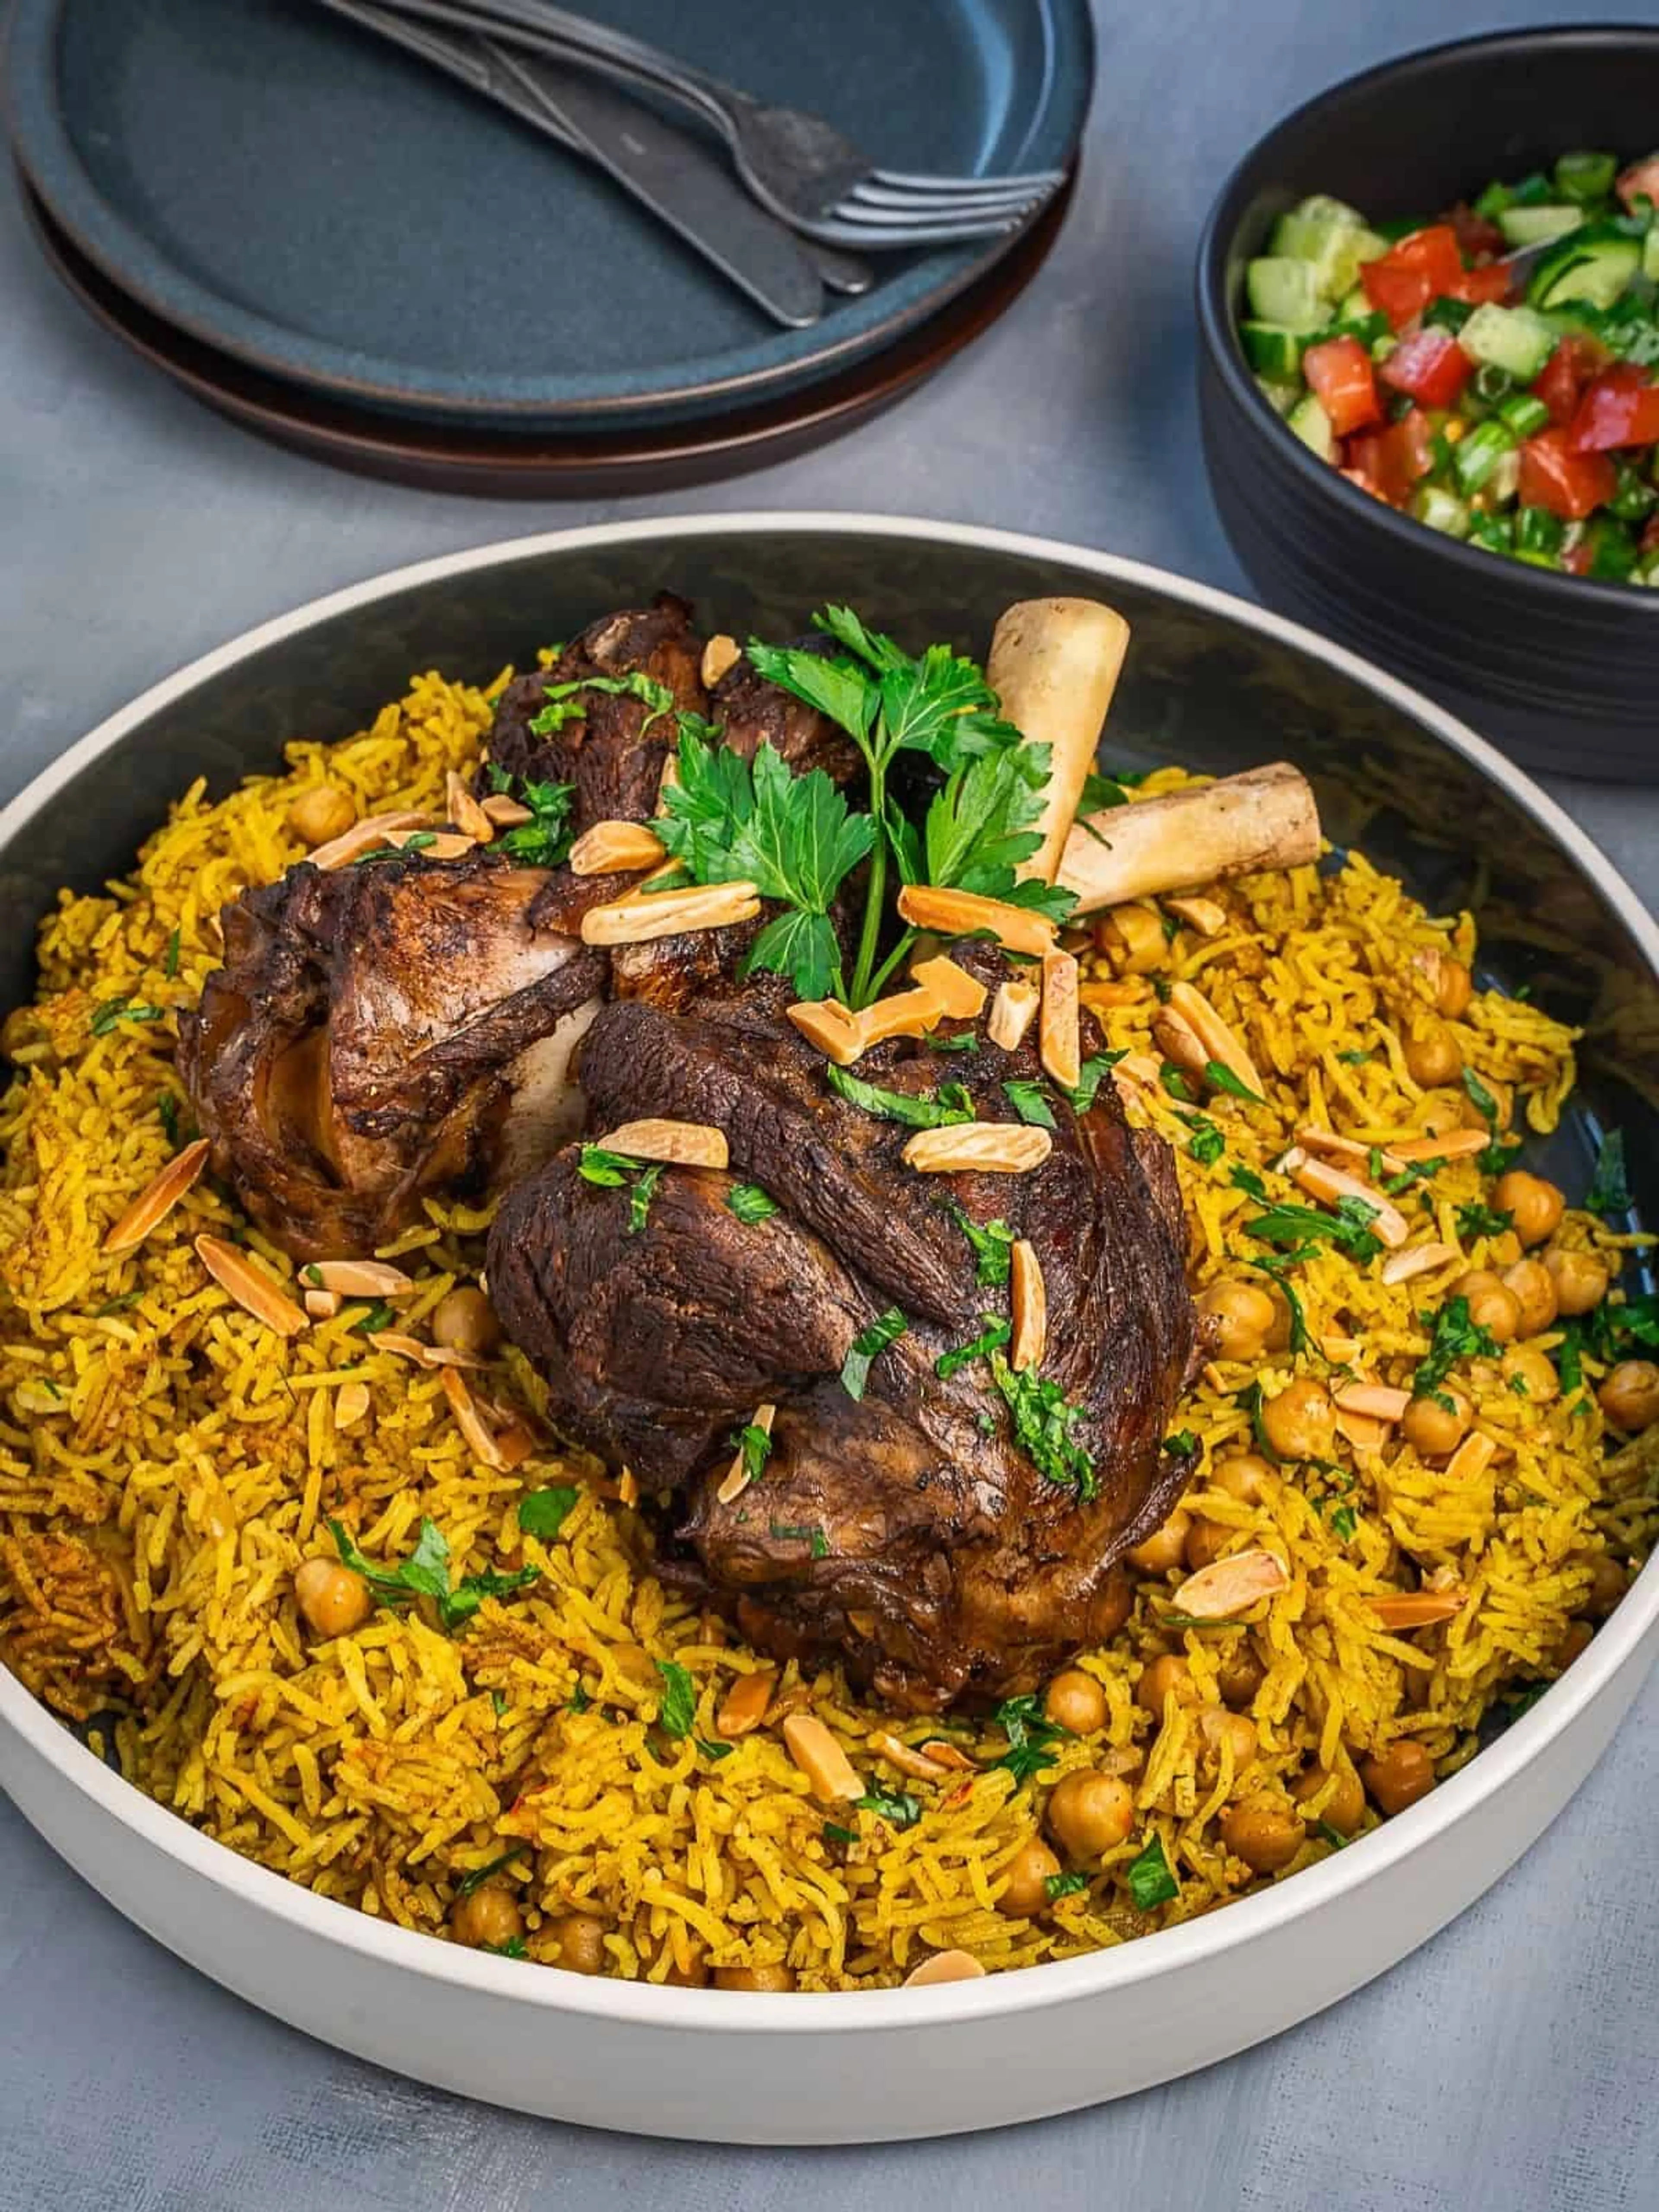 Qidreh (Palestinian Spiced Lamb and Rice Recipe)